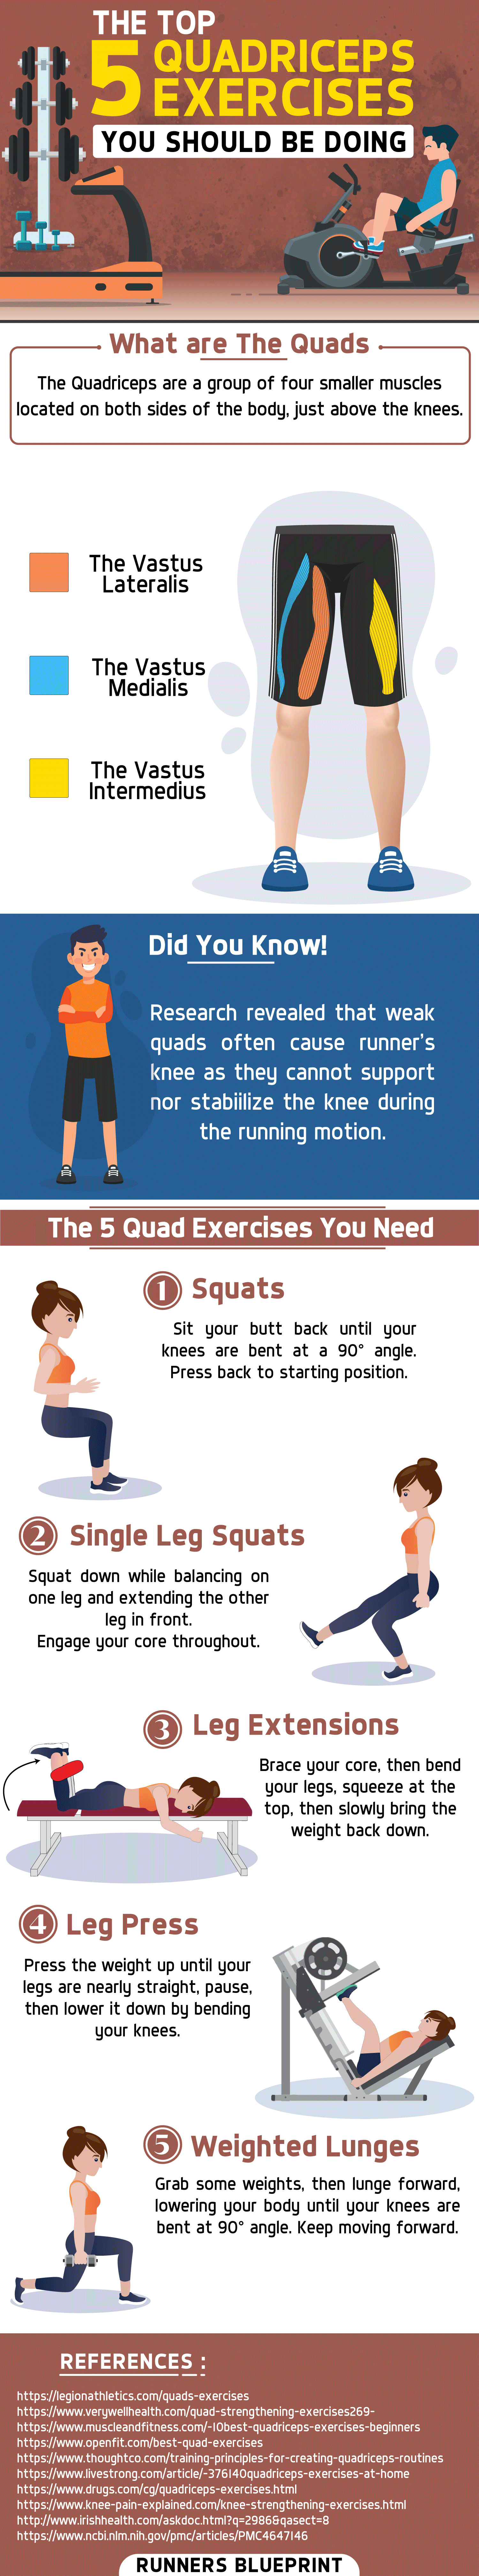 quadriceps exercises